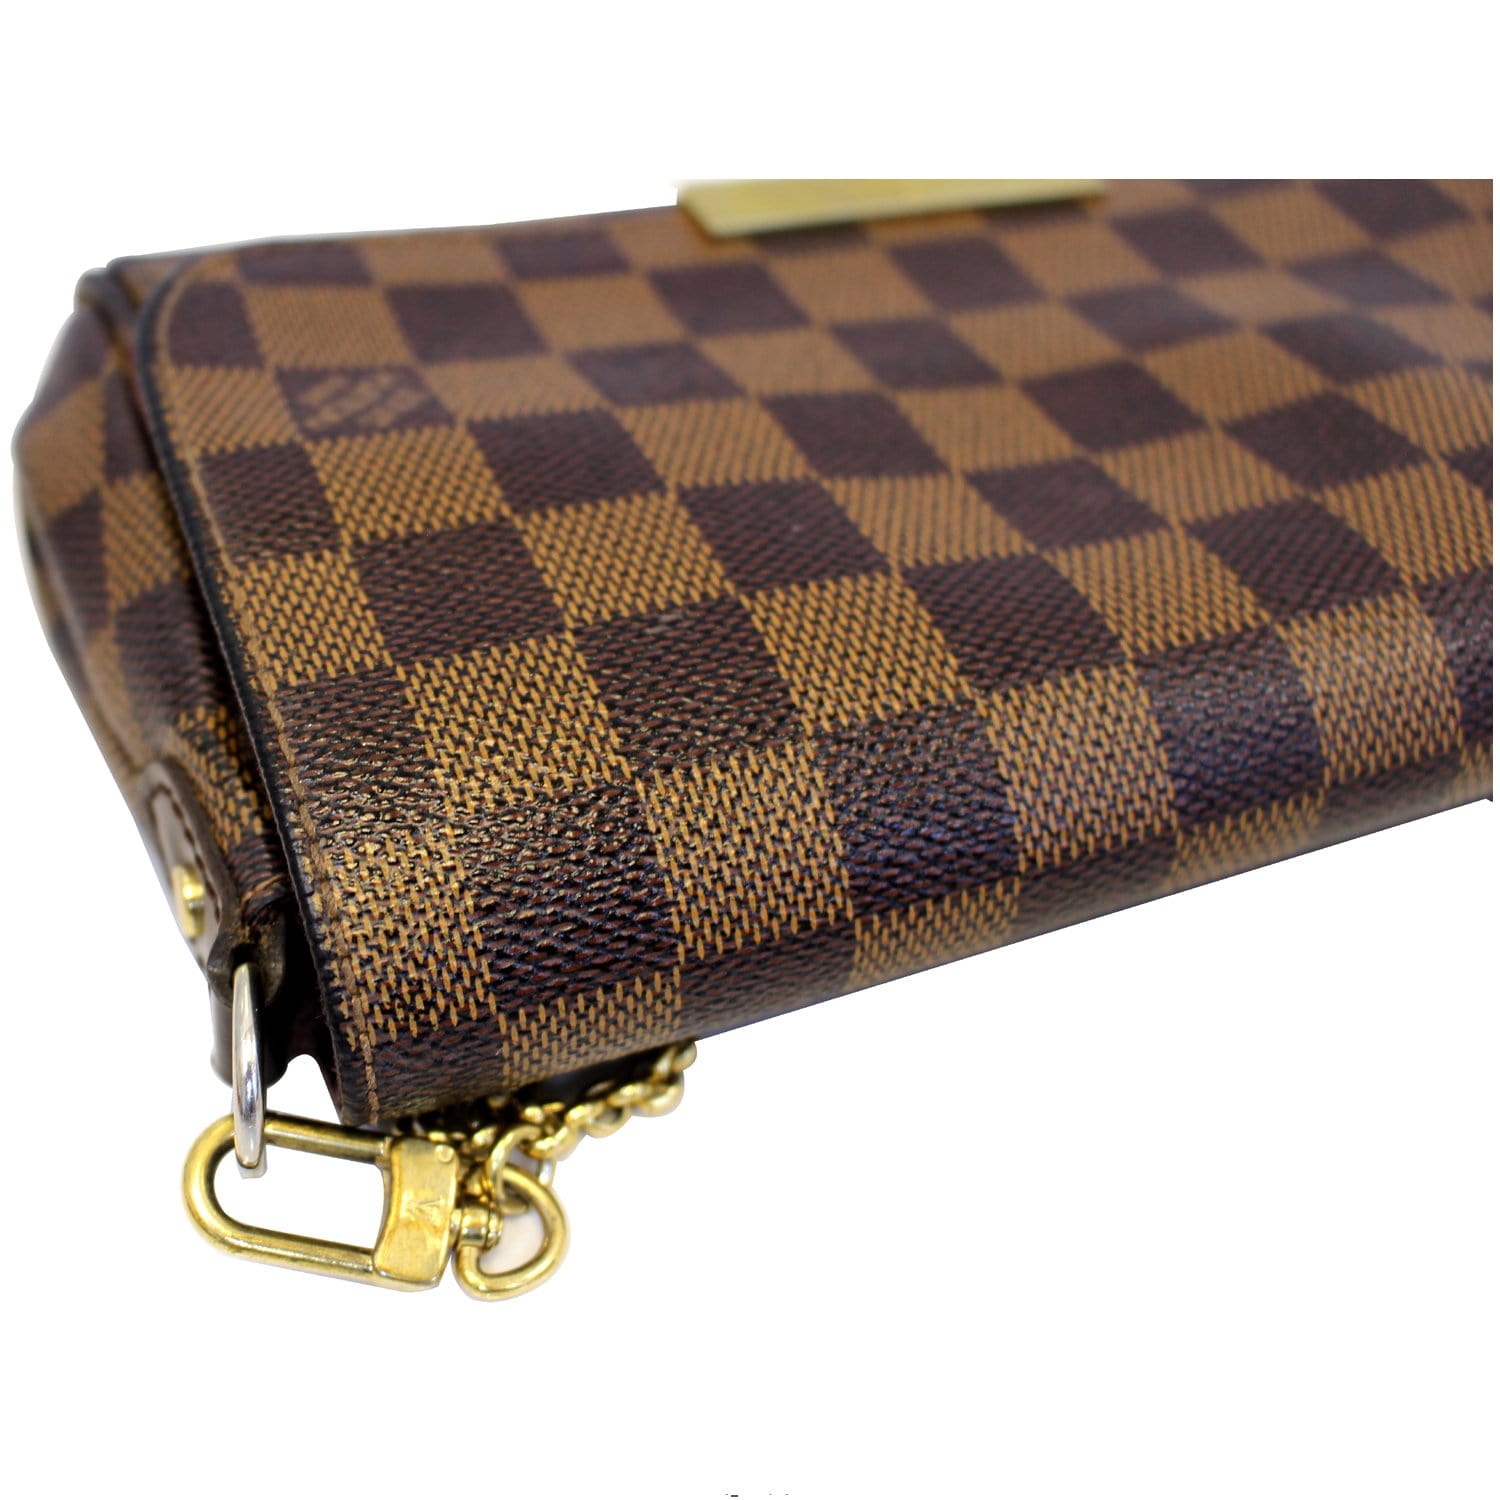 Louis Vuitton Favorite PM Damier Ebene Crossbody Bag